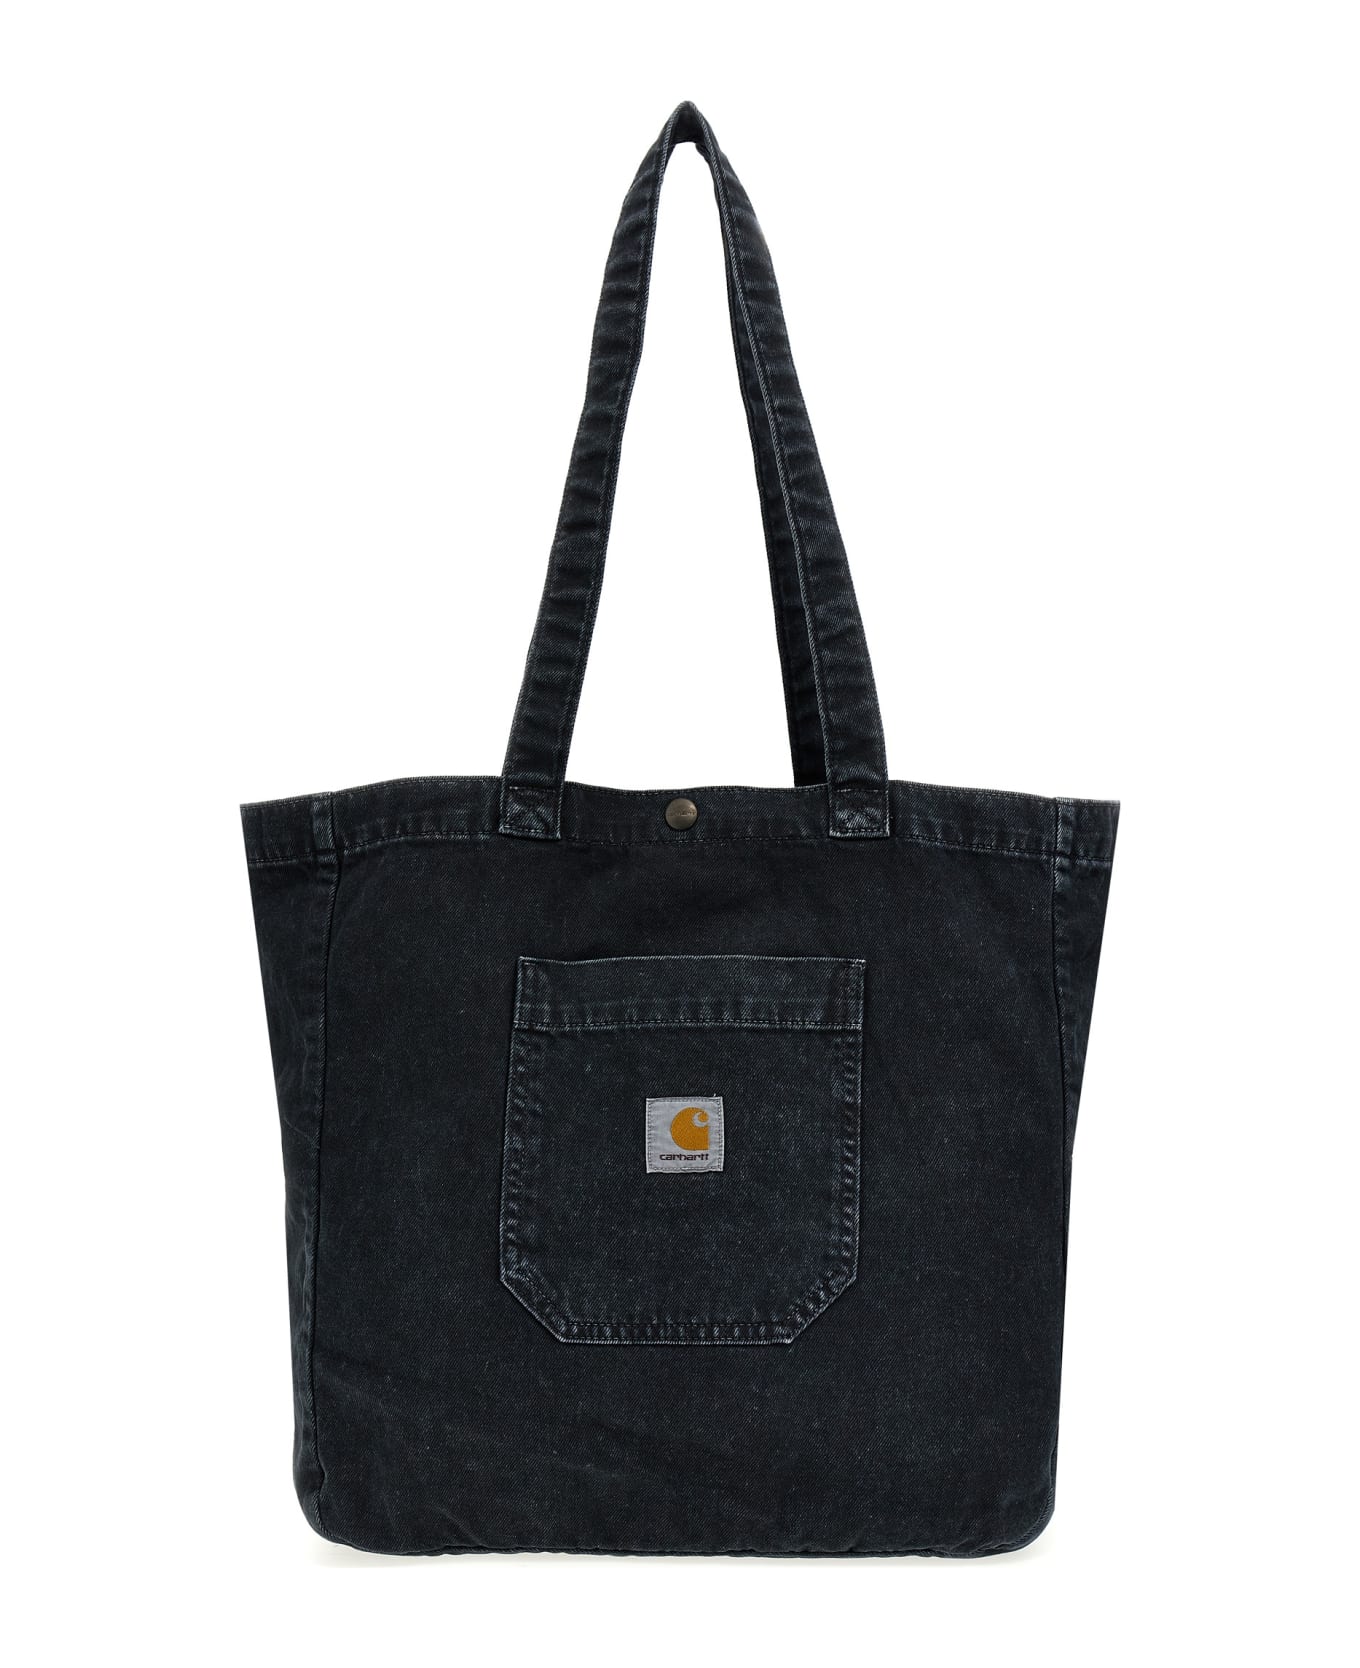 Carhartt 'garrison' Shopping Bag - Black  